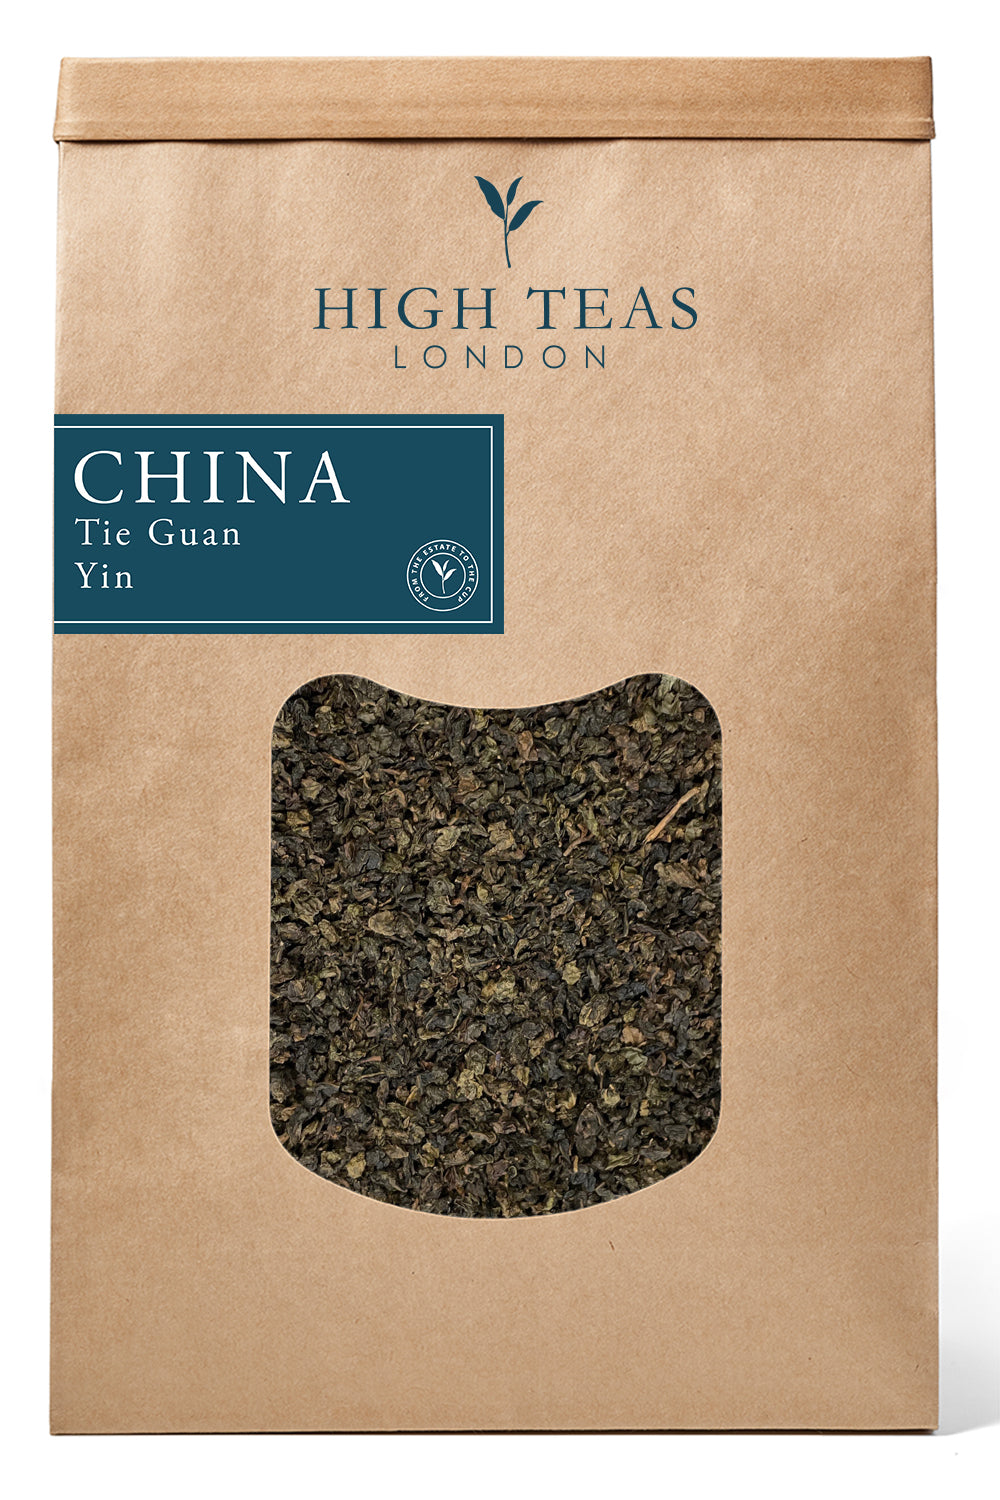 China - Tie Guan Yin Iron Buddha-500g-Loose Leaf Tea-High Teas